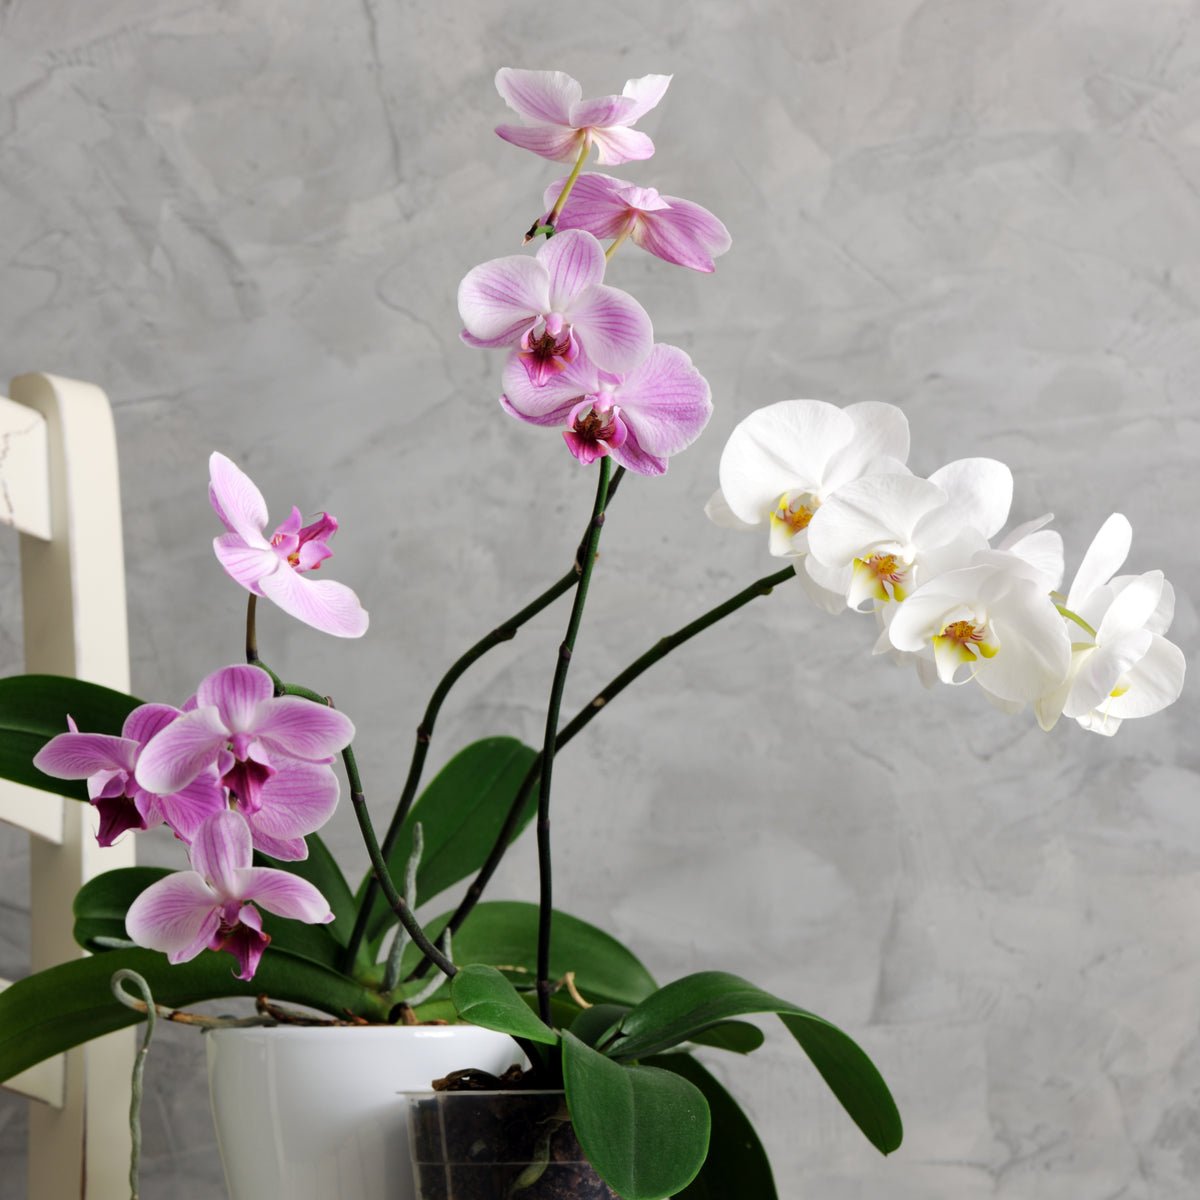 Orchid Bloom Feed - The Irish Gardener Store